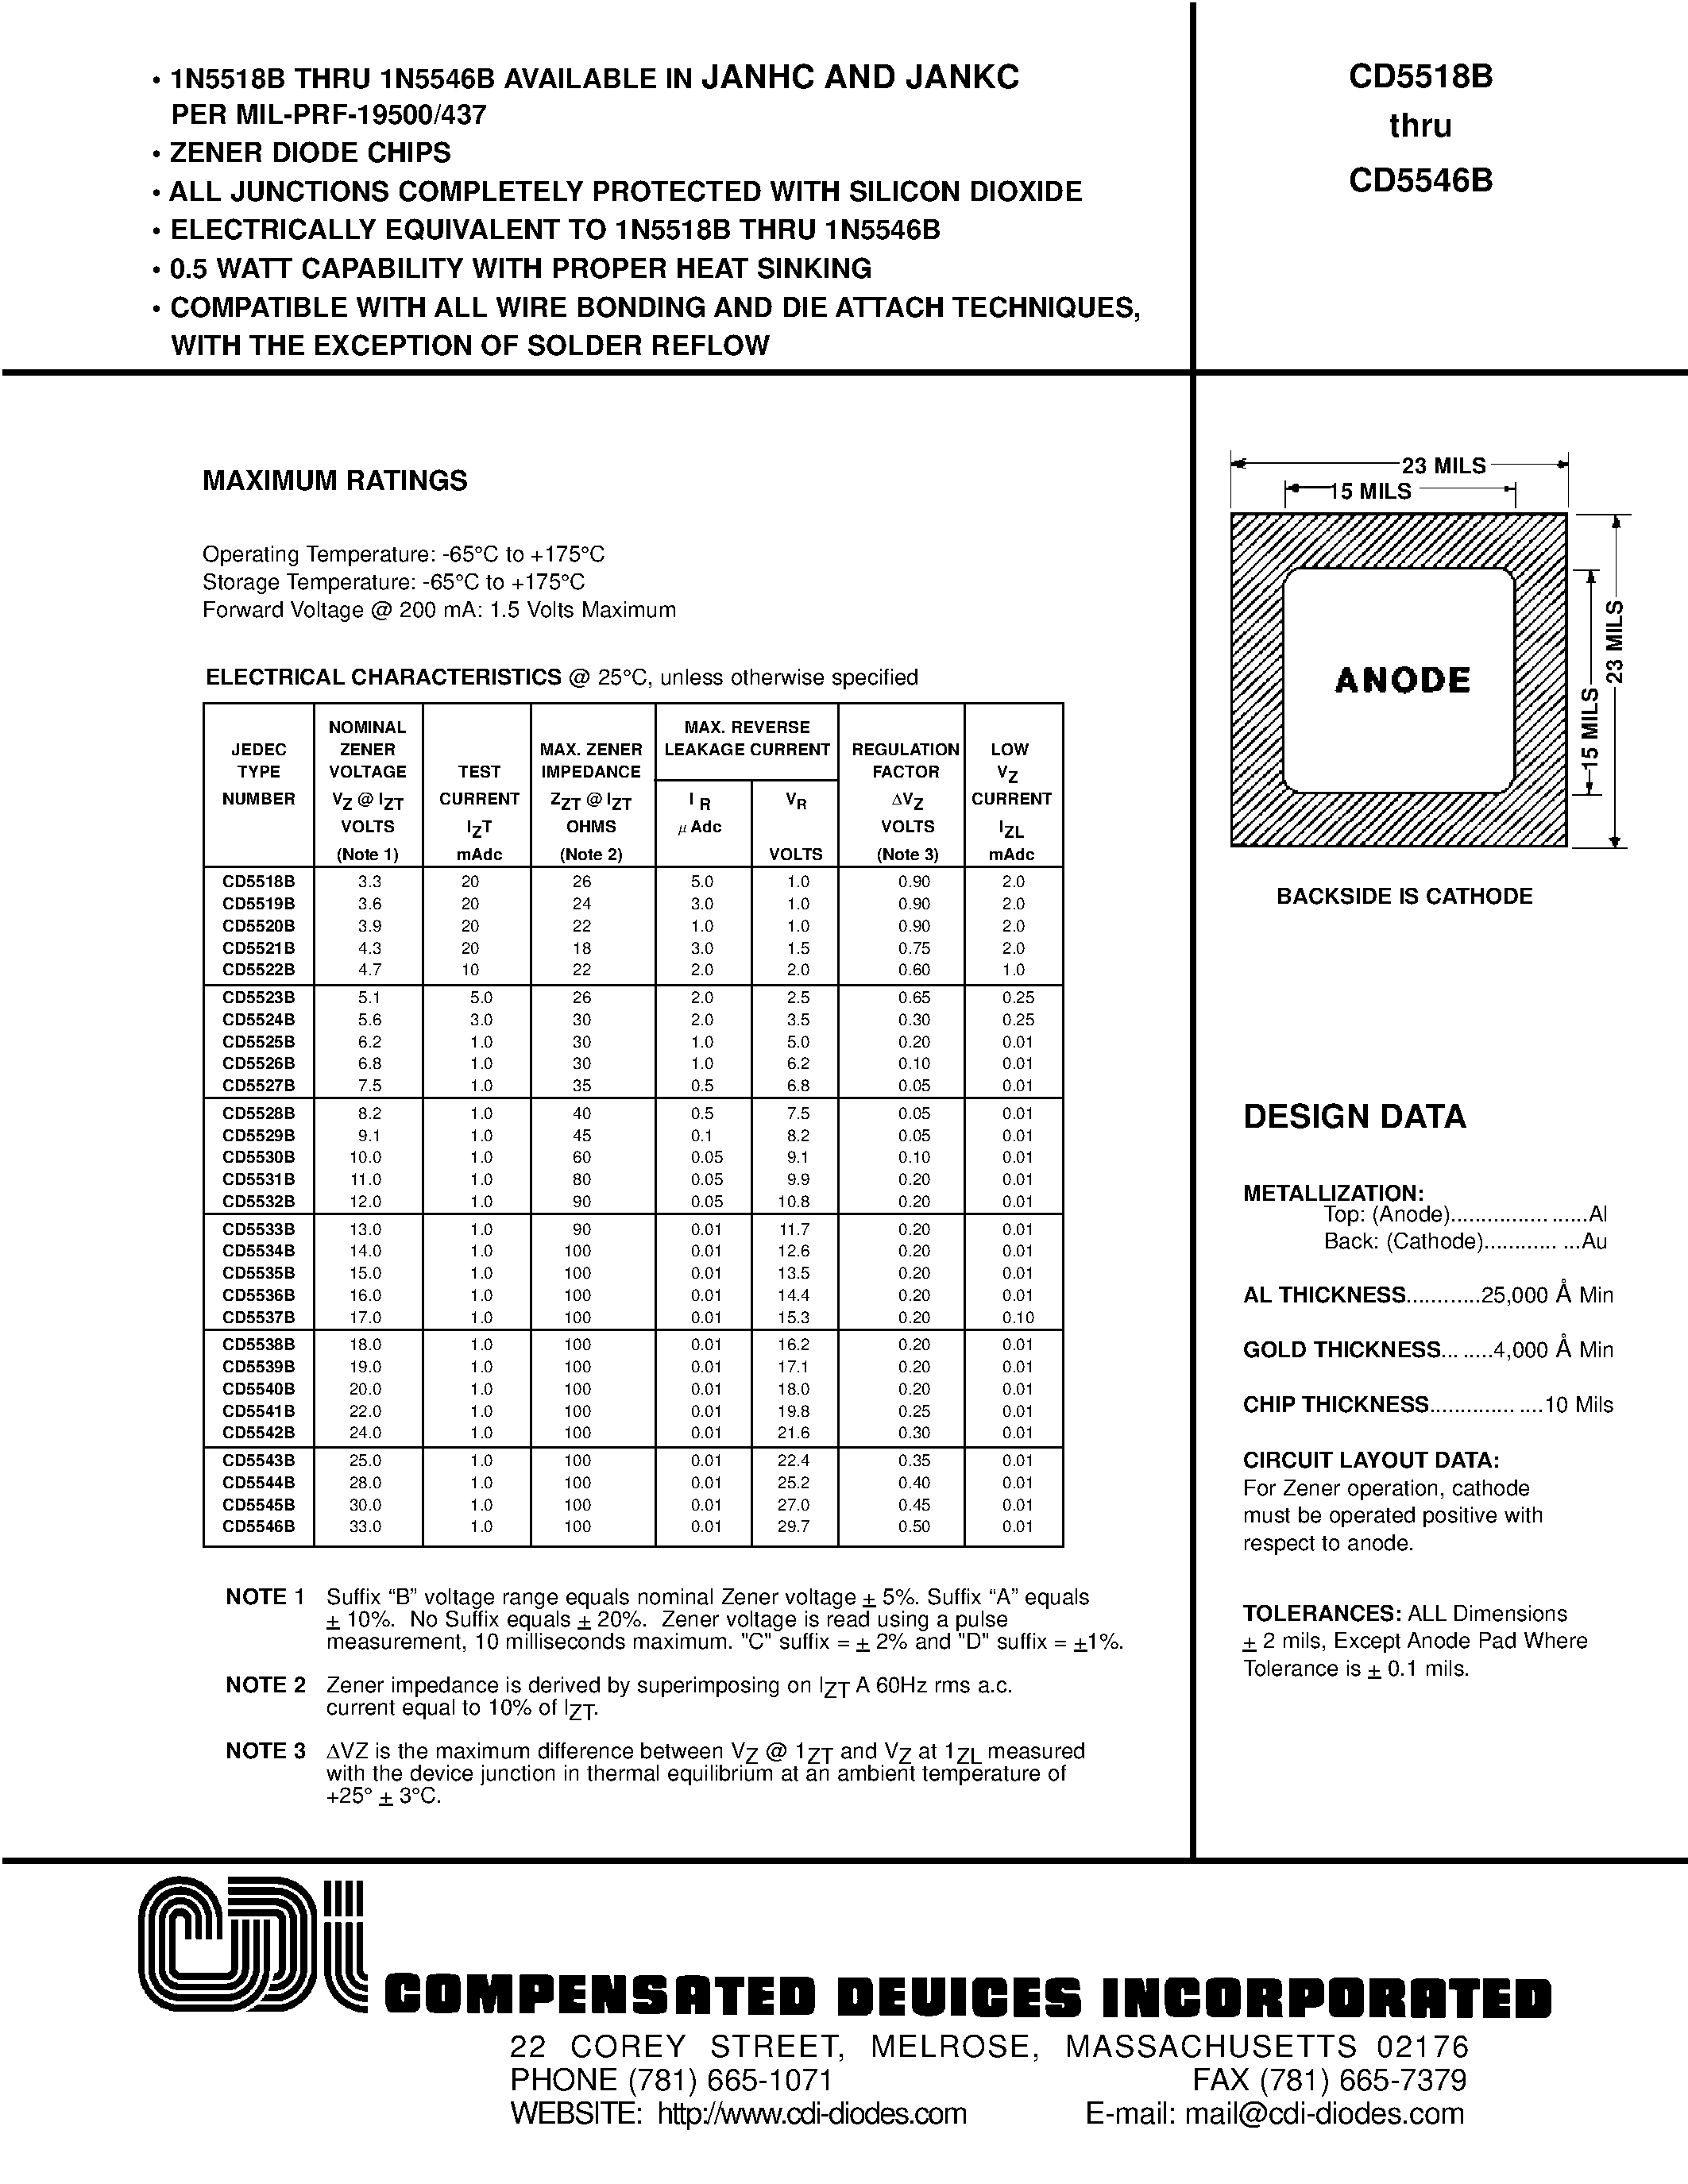 Datasheet CD5540B - ZENER DIODE CHIPS page 1